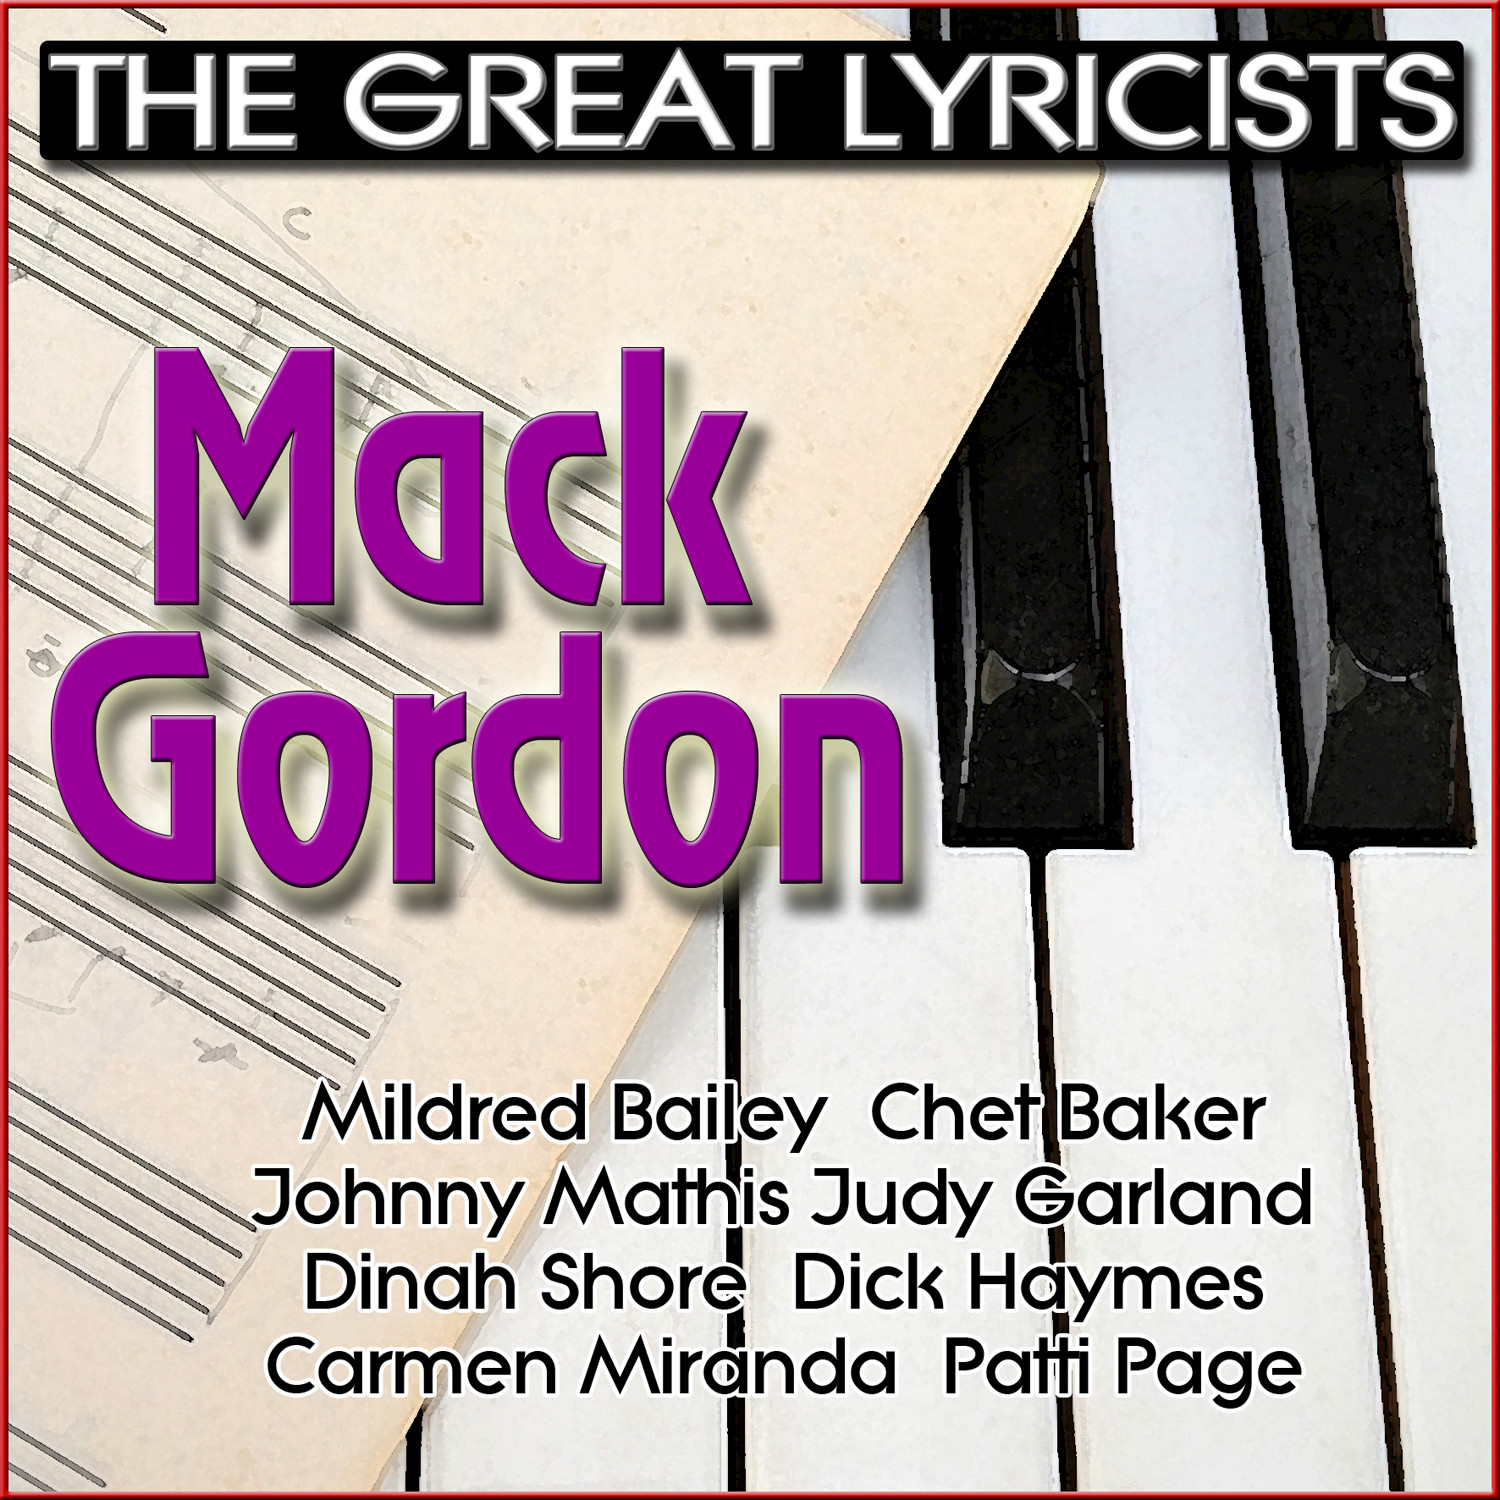 The Great Lyricists - Mack Gordon